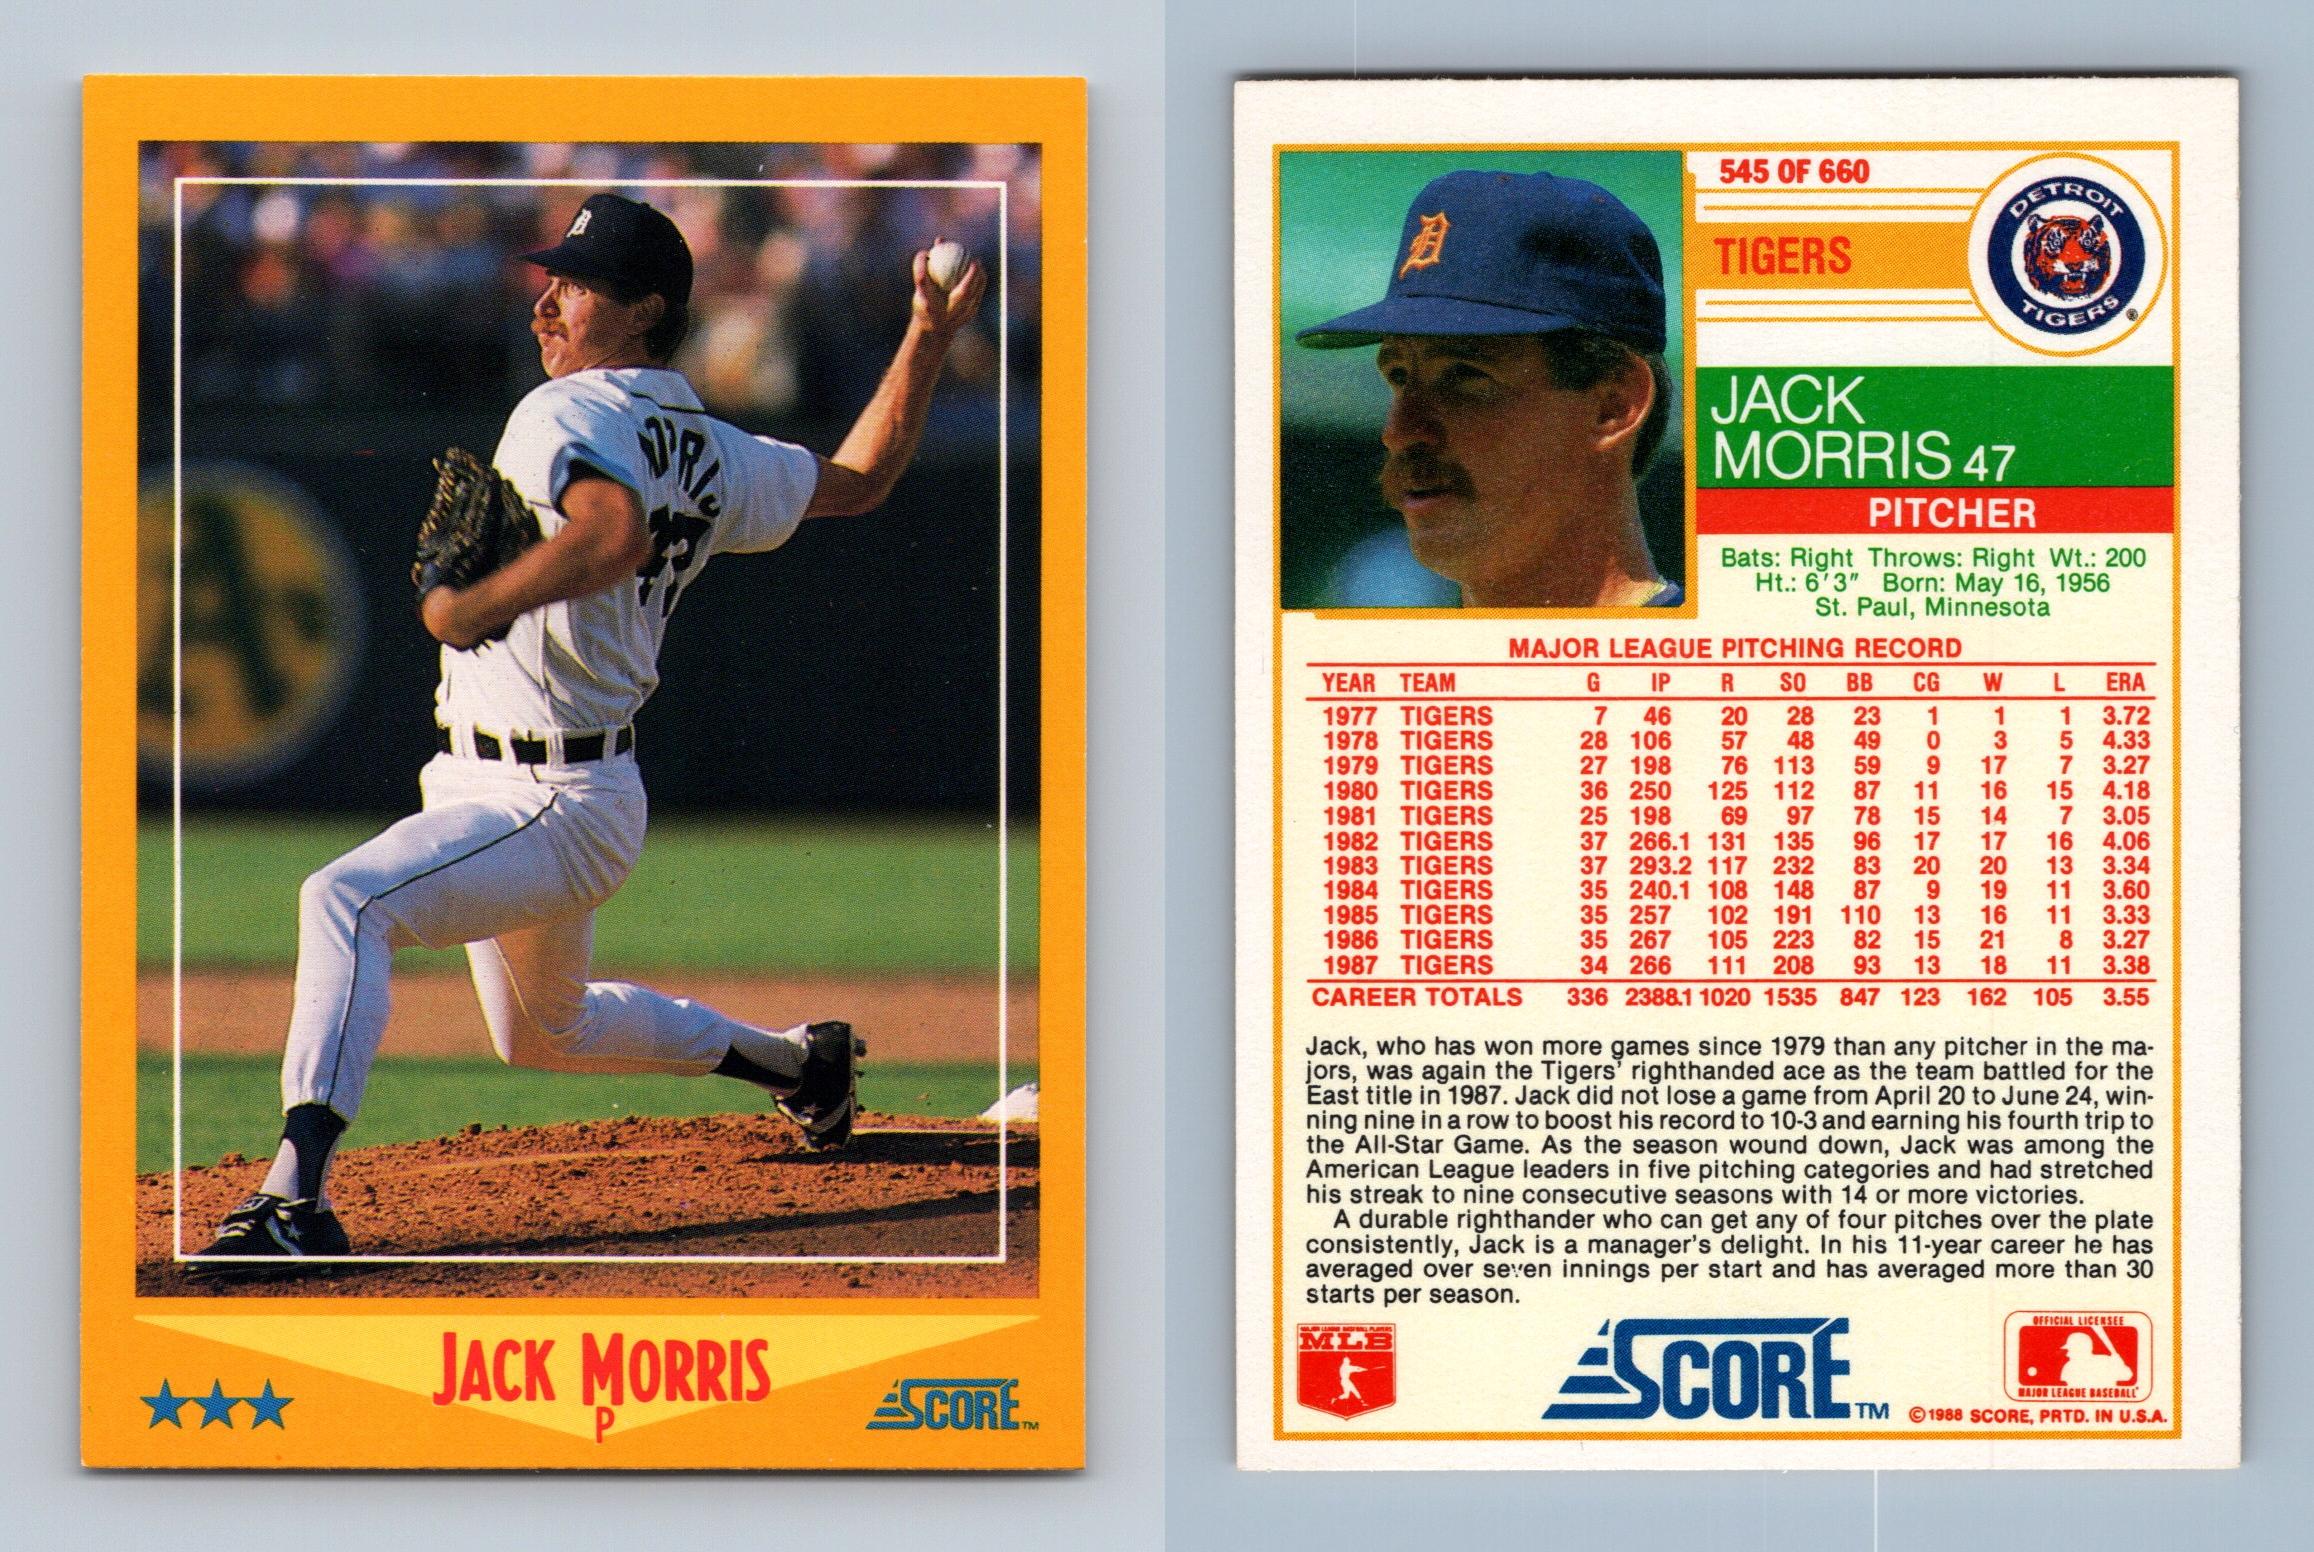 Jack Morris' baseball career